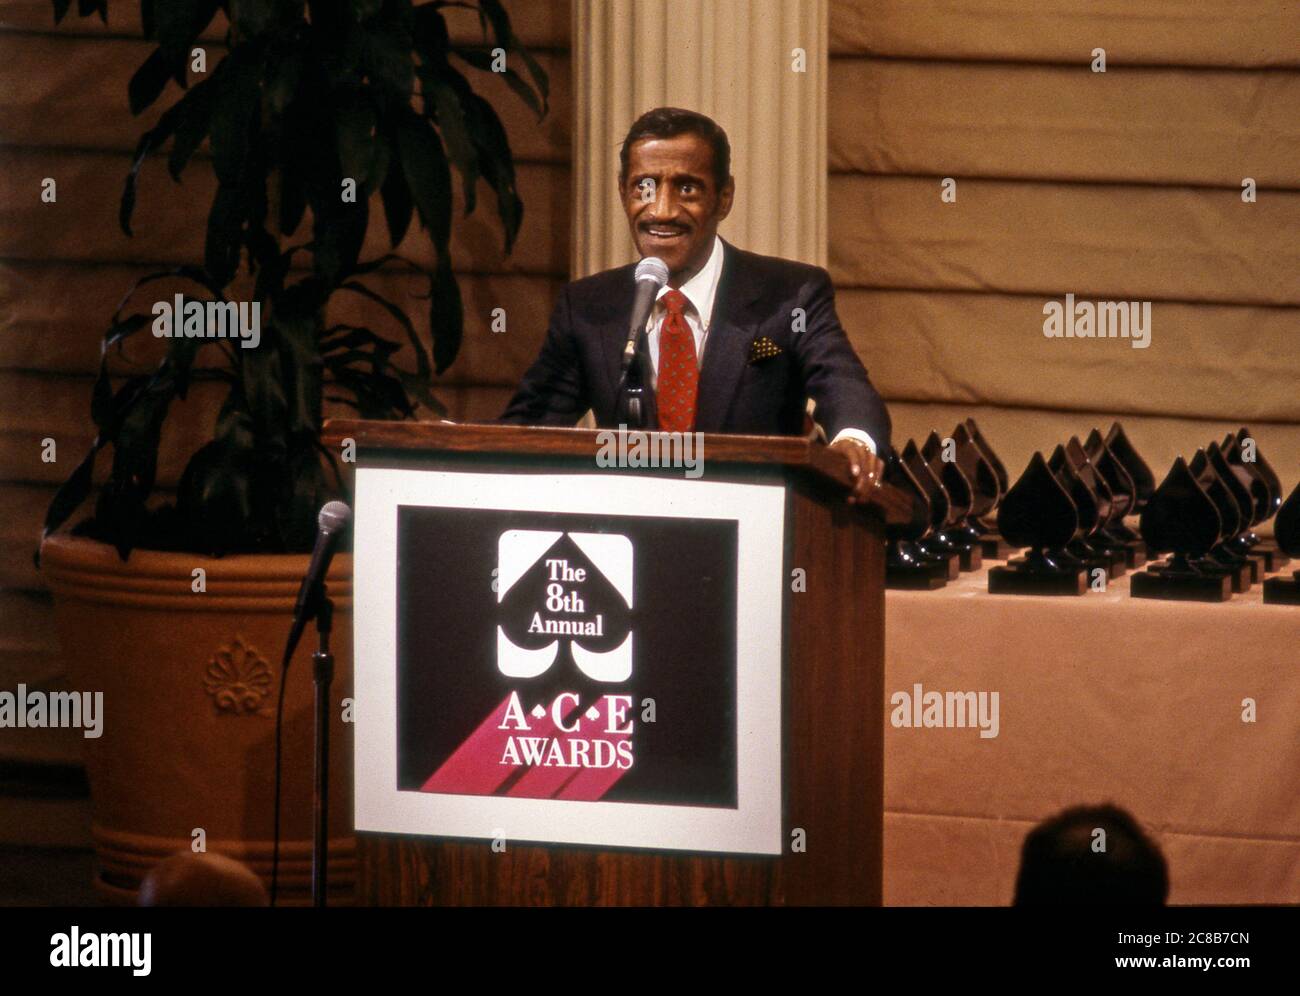 Sammy Davis Jr. All'ottava cerimonia annuale dei Cable Ace Awards. Foto Stock